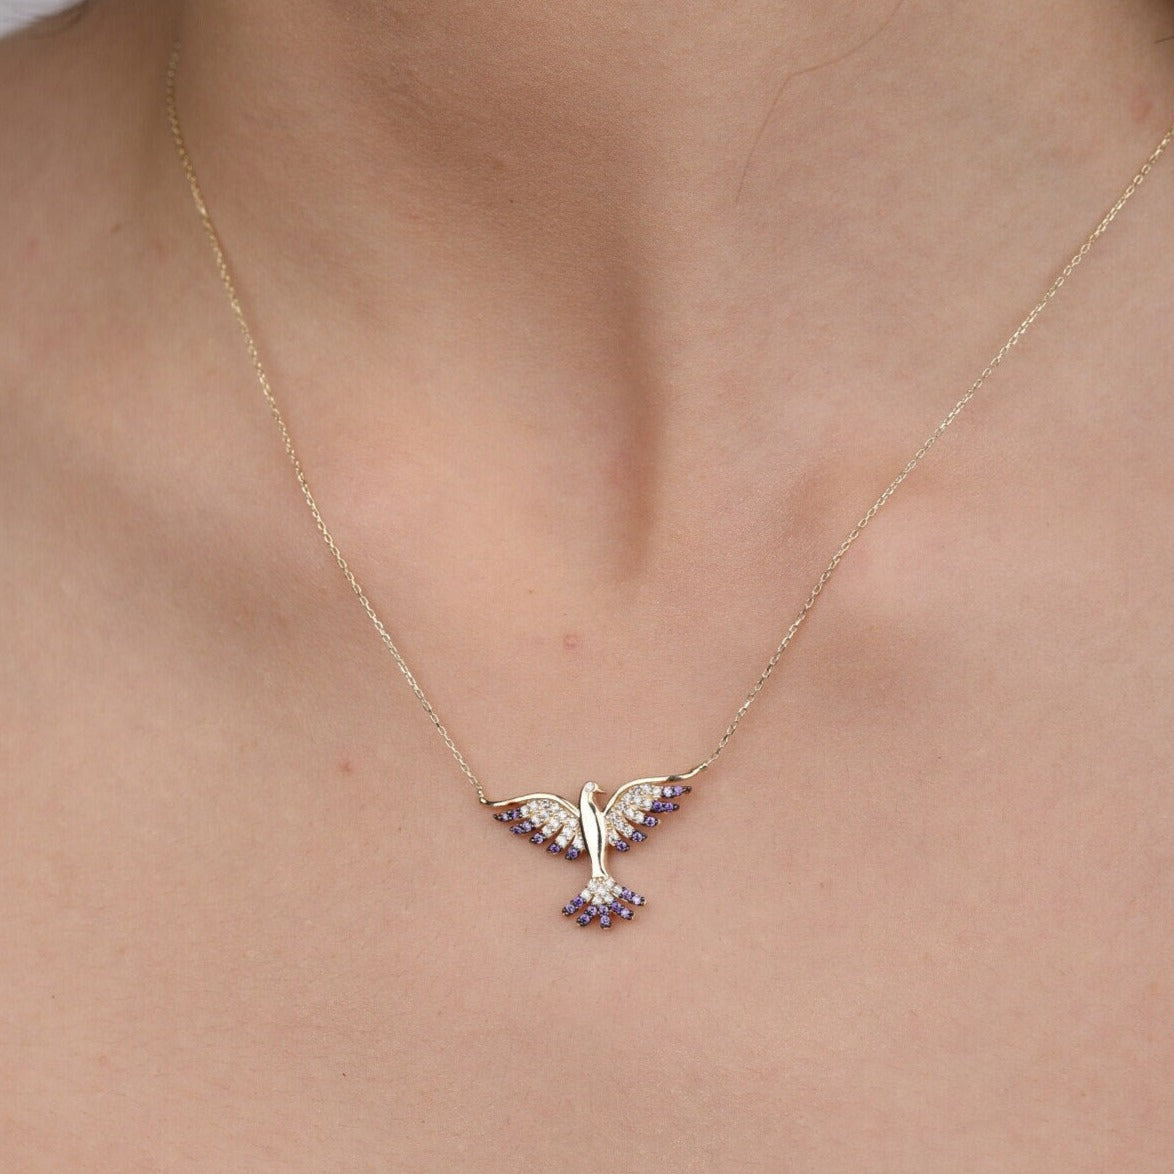 Cz White& Amethyst Phoenix Necklace